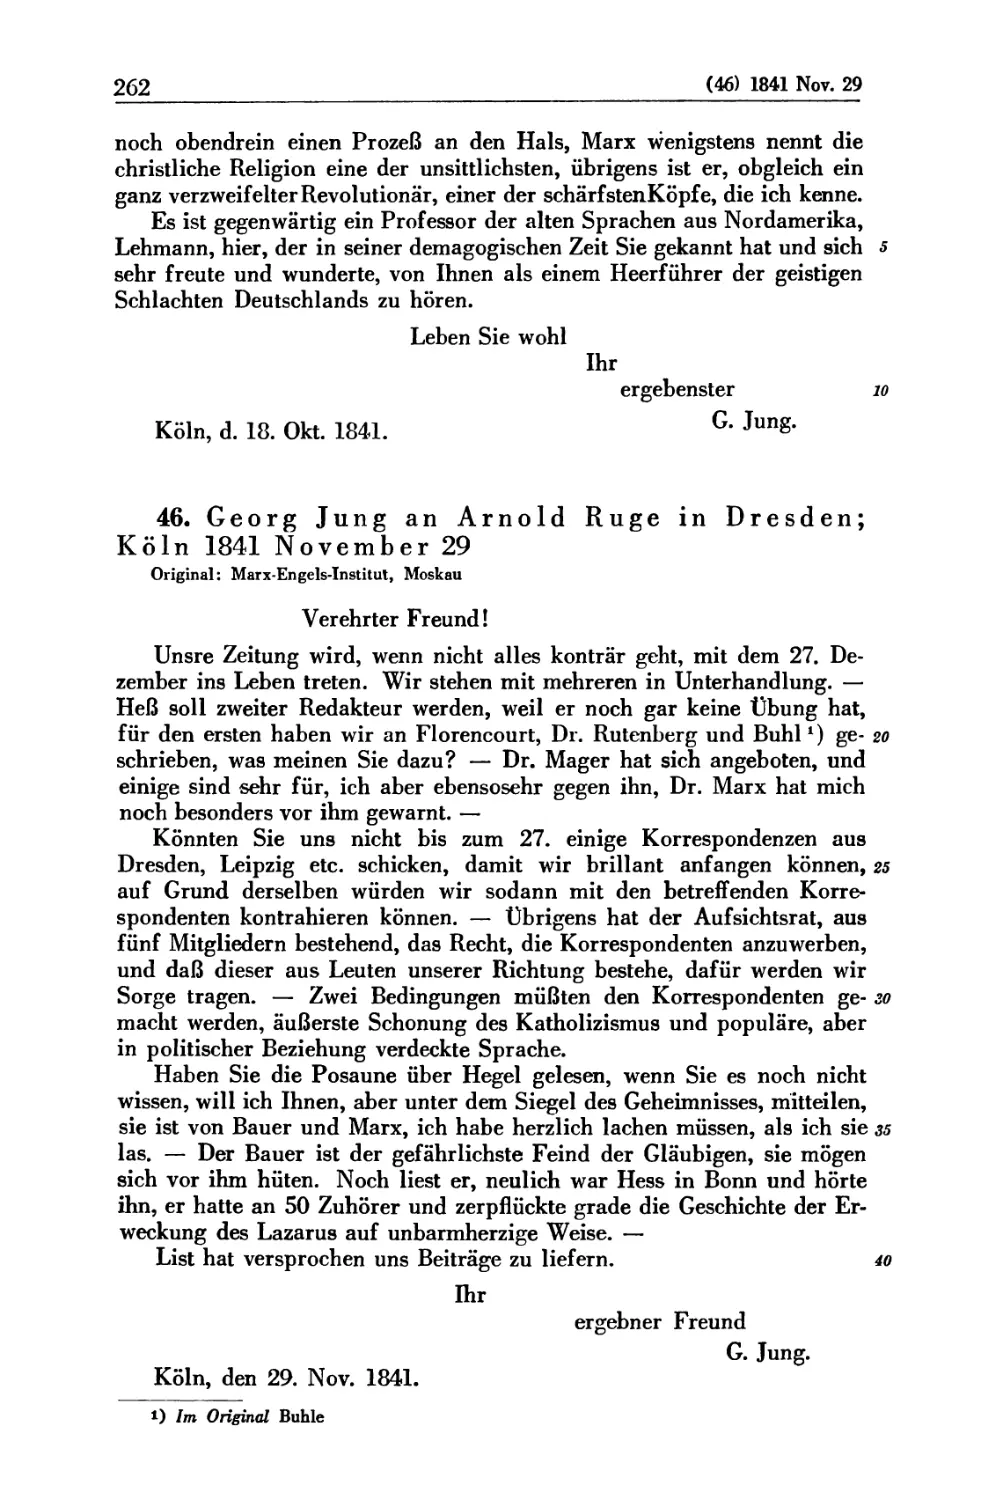 46. Georg Jung an Arnold Ruge in Dresden; Köln 1841 November 29